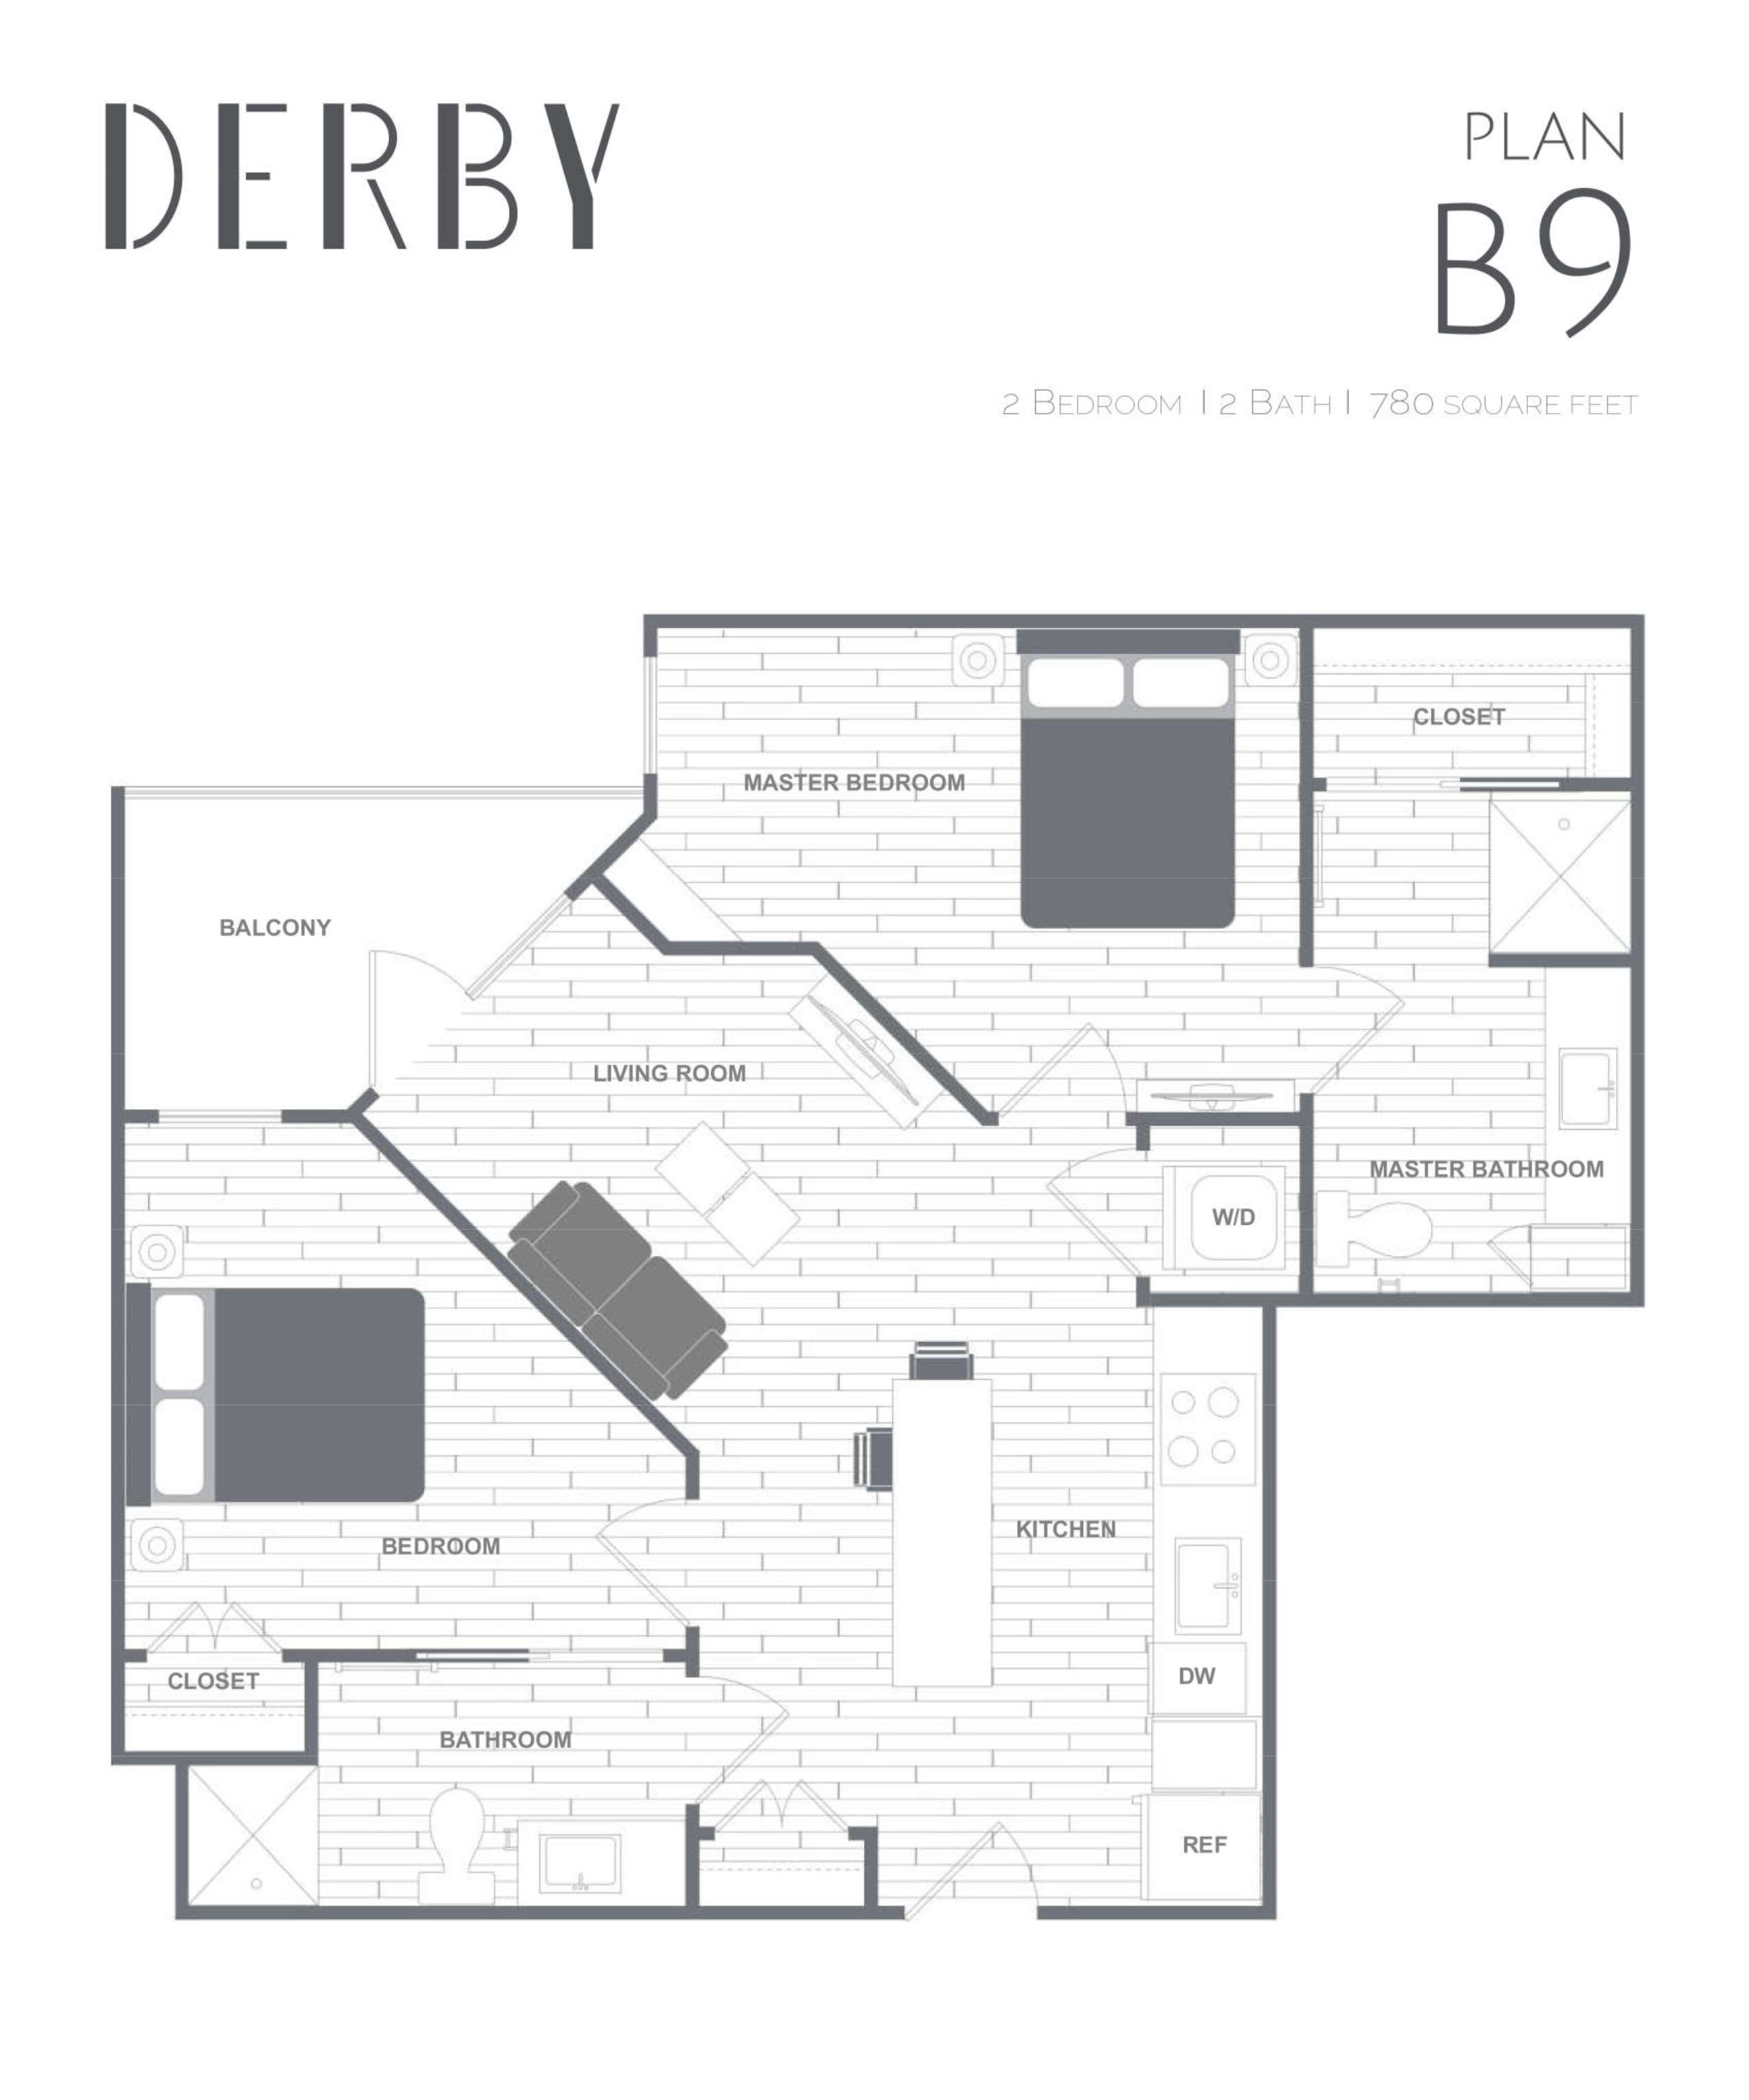 B9 floor plan